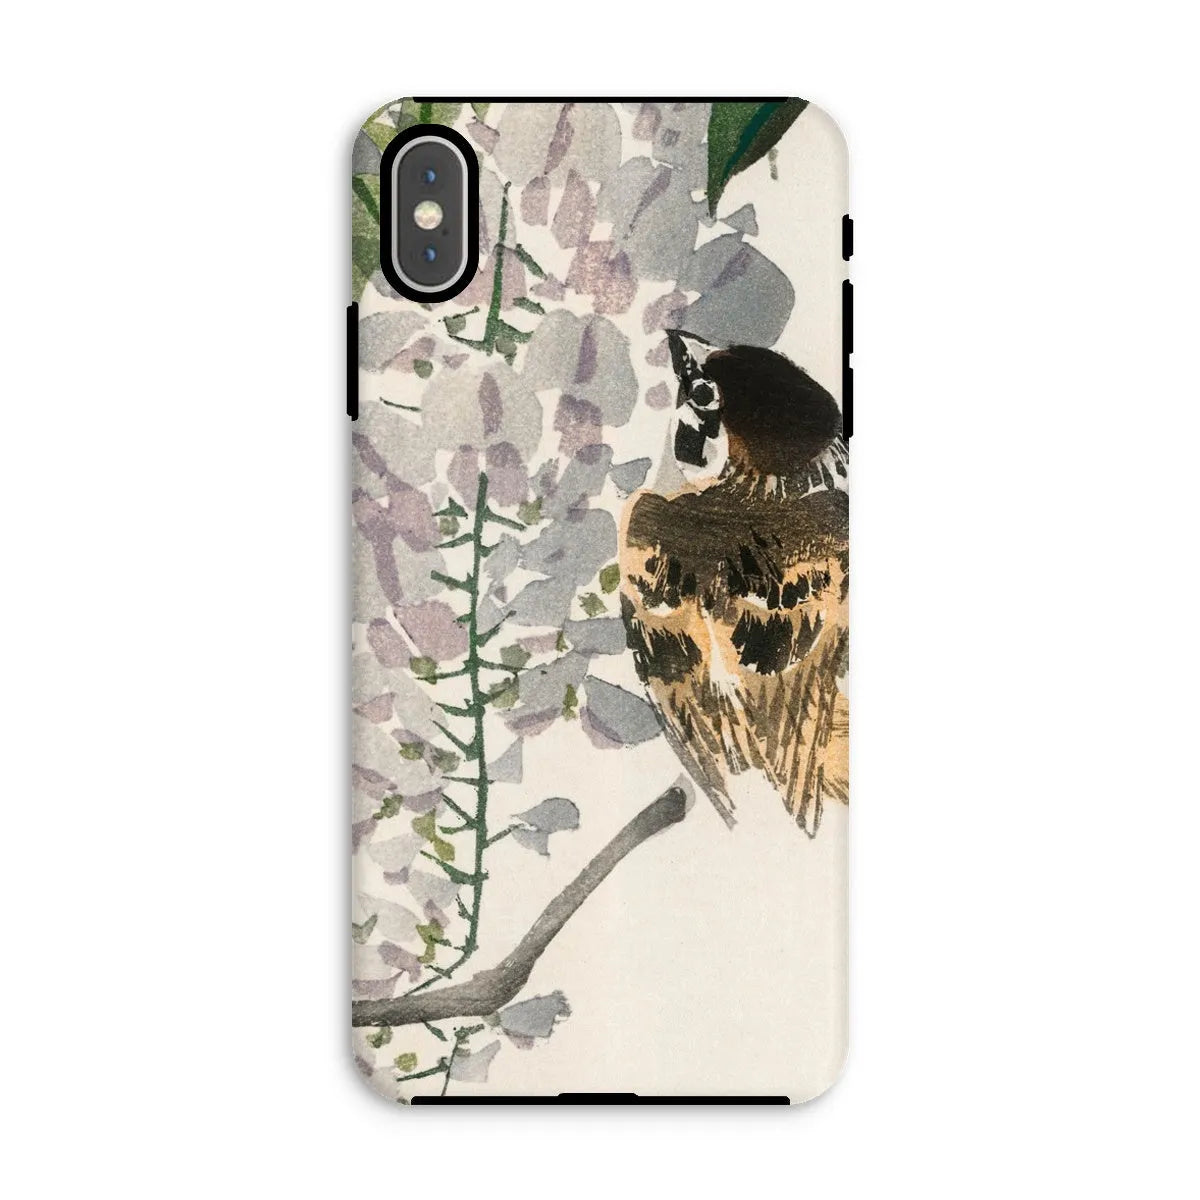 Sparrow On a Branch - Meiji Bird Phone Case - Kōno Bairei - Iphone Xs Max / Matte - Mobile Phone Cases - Aesthetic Art